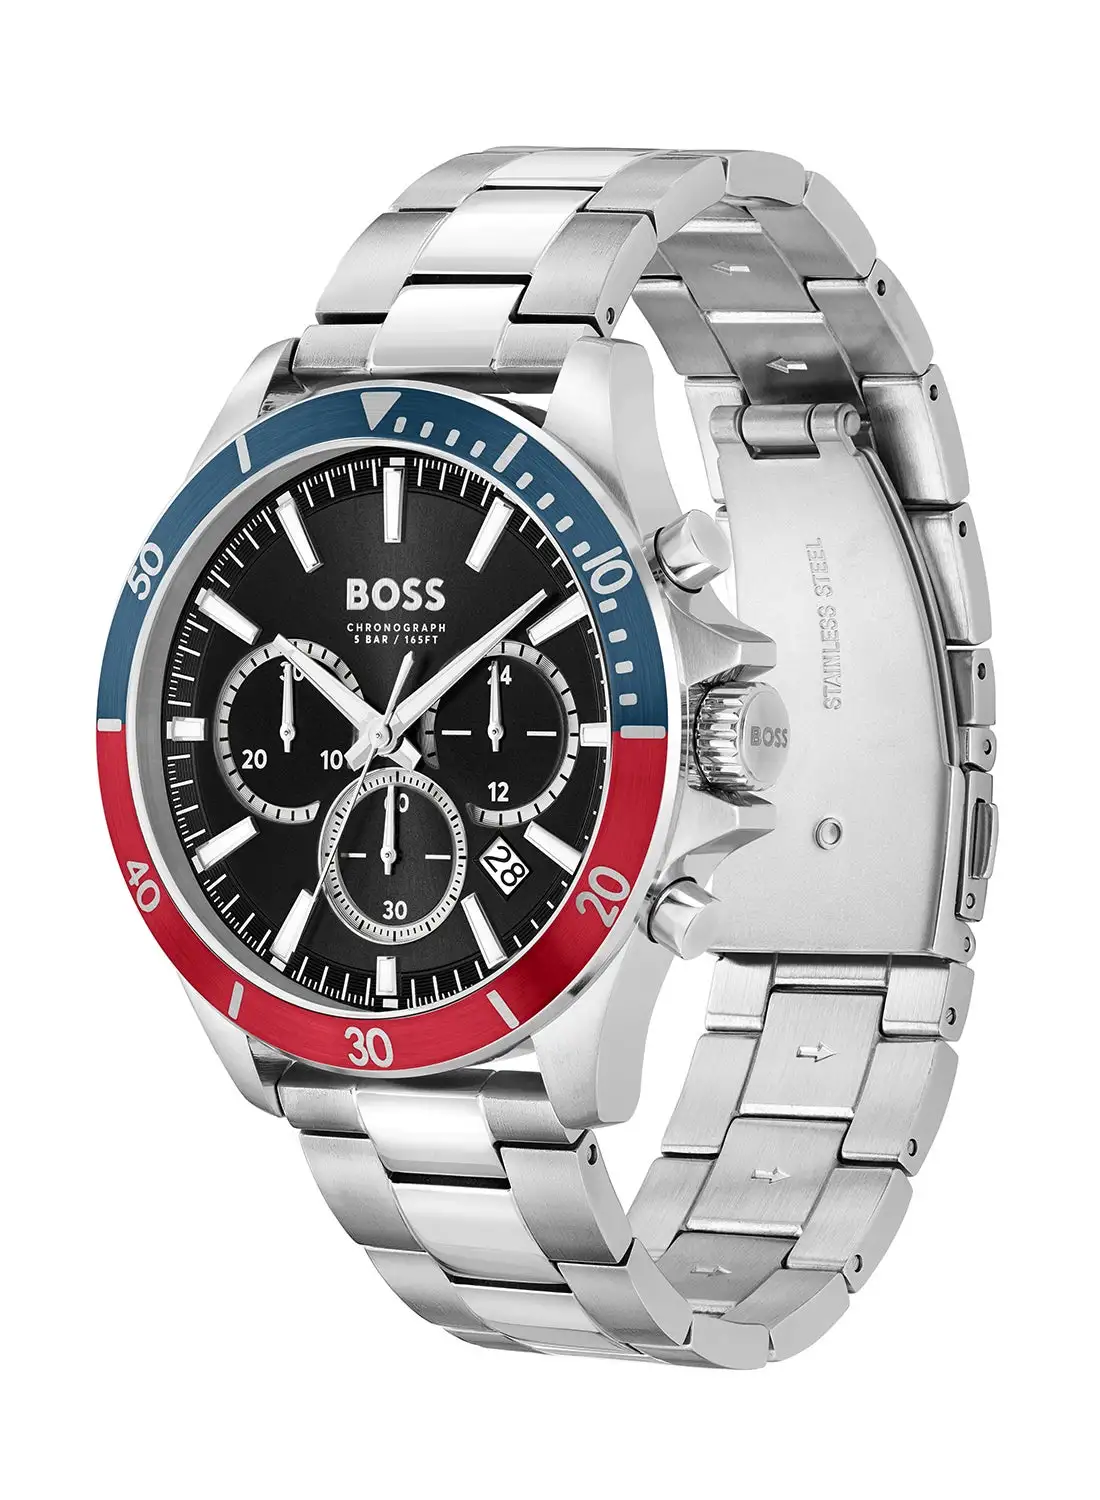 HUGO BOSS Men's Chronograph Round Shape Stainless Steel Wrist Watch 1514108 - 45 Mm